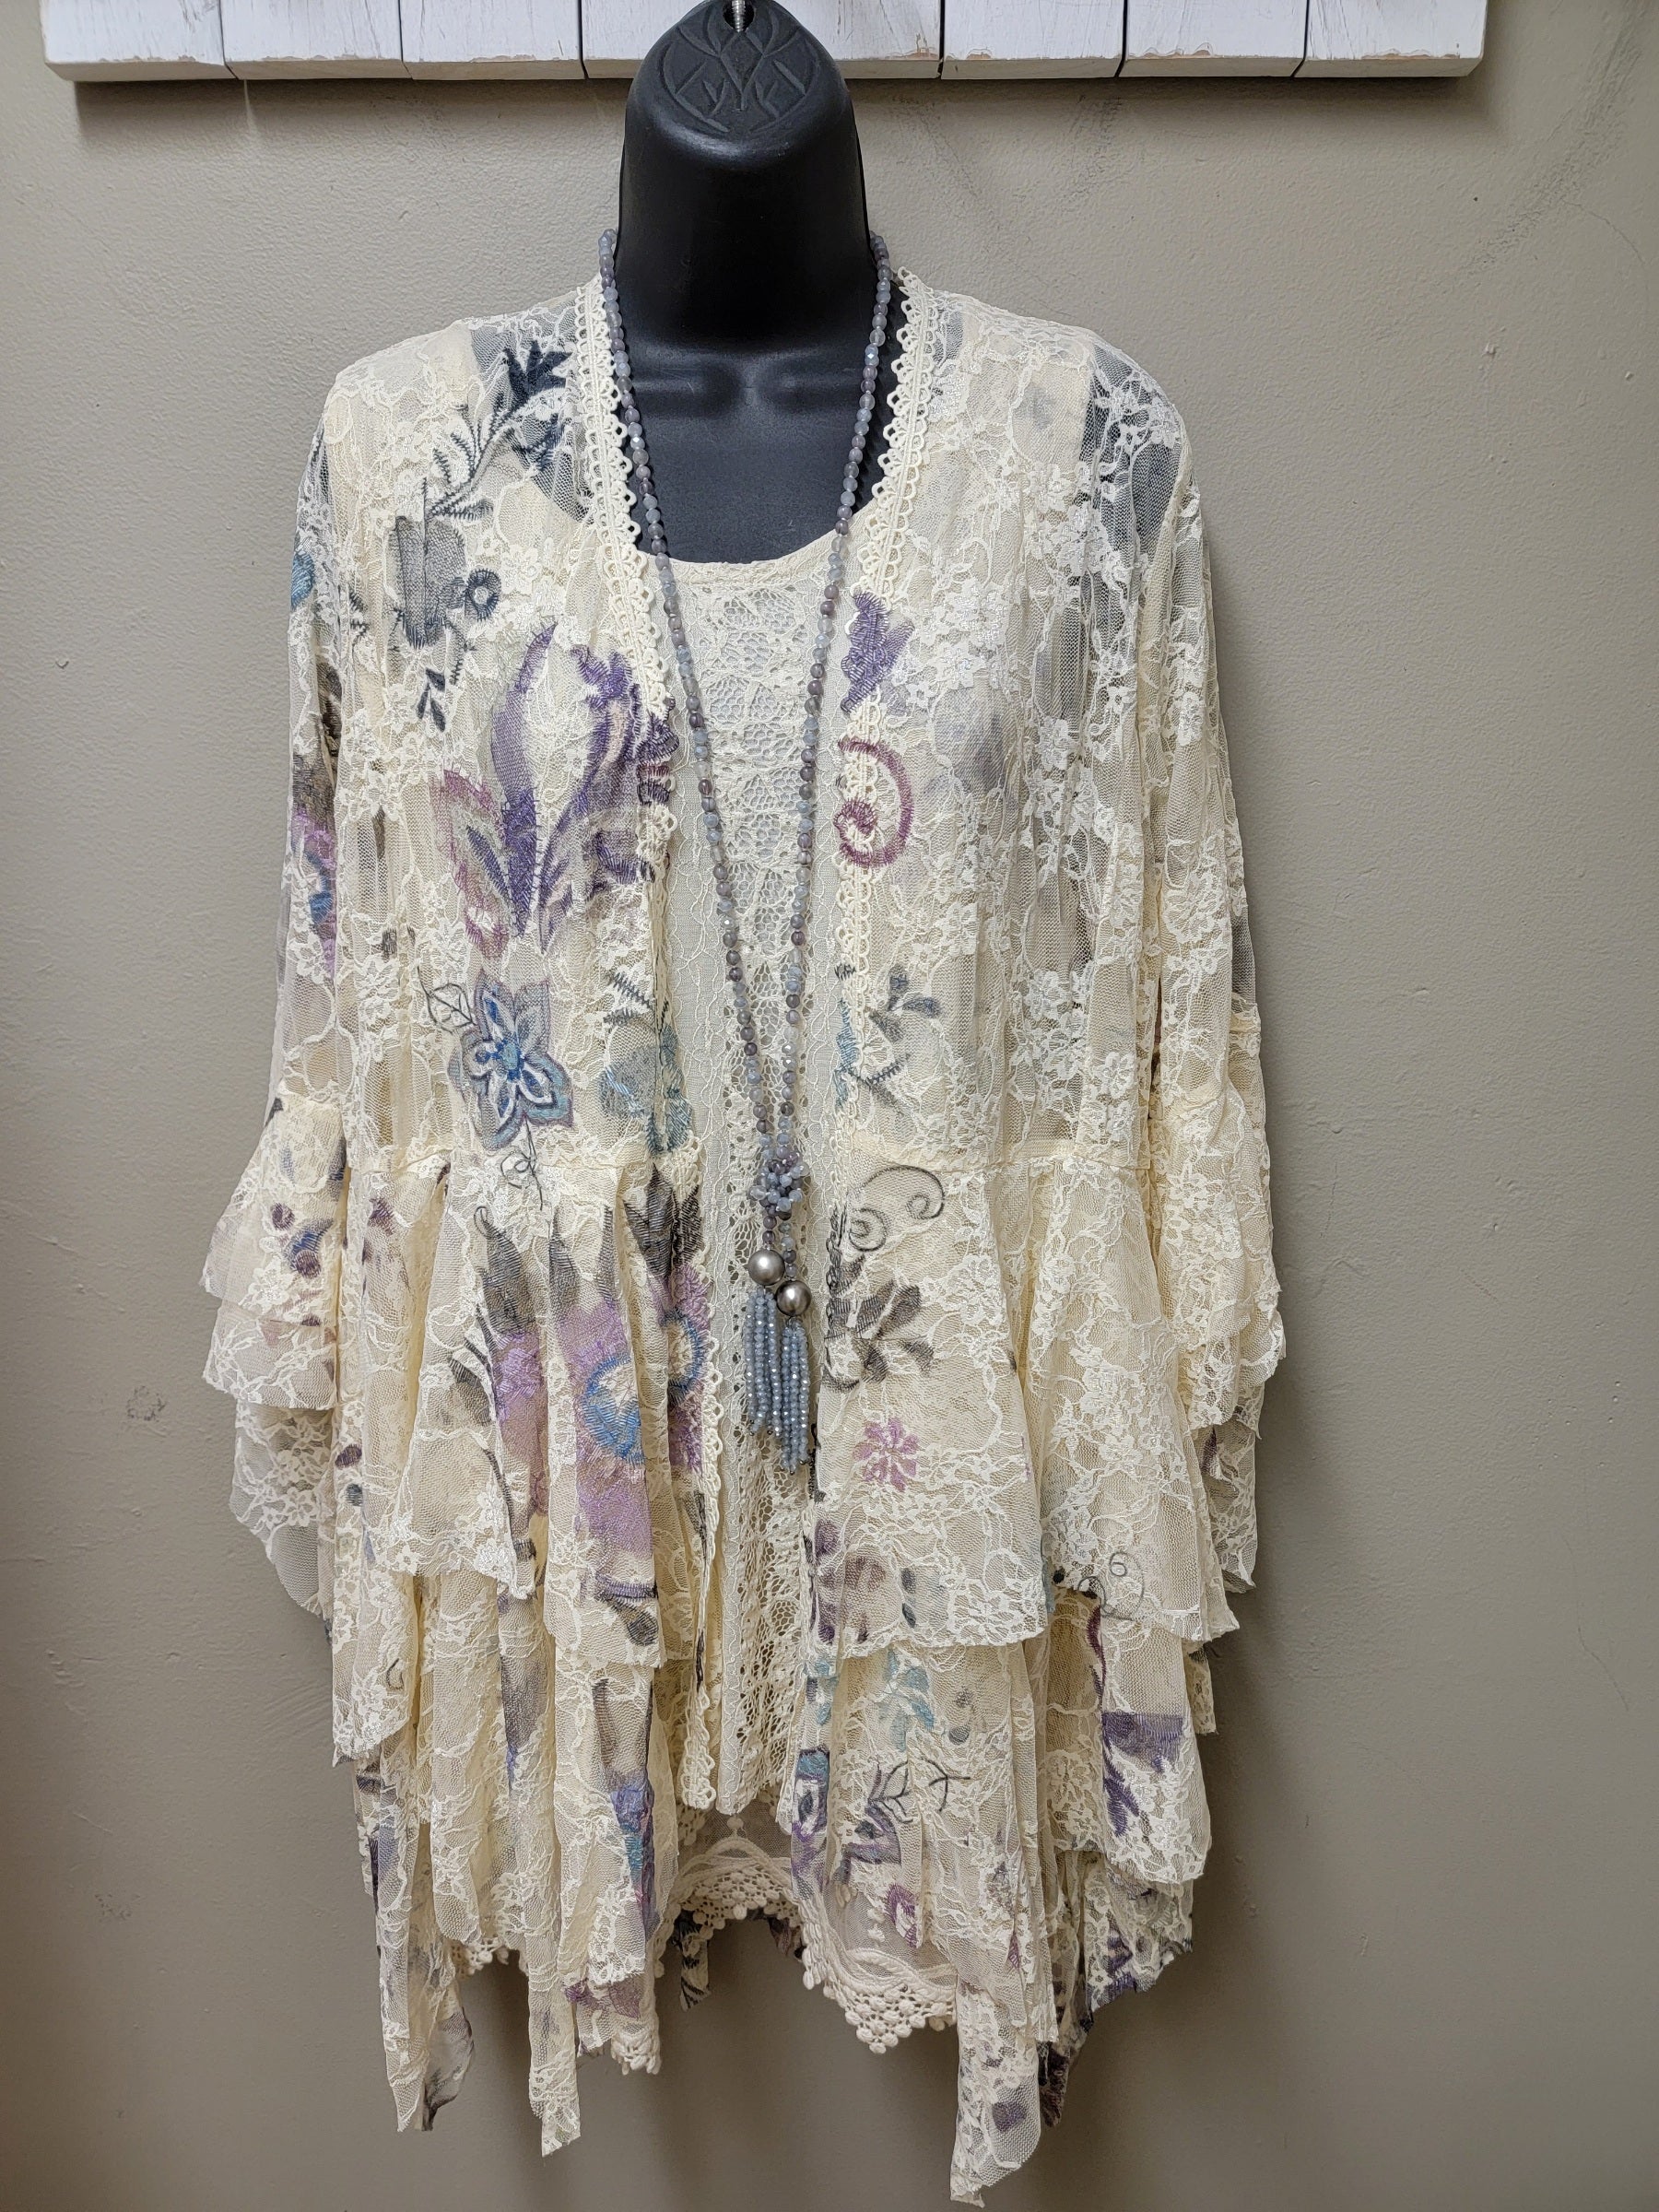 Elegant Lacey Jacket with Floral Design